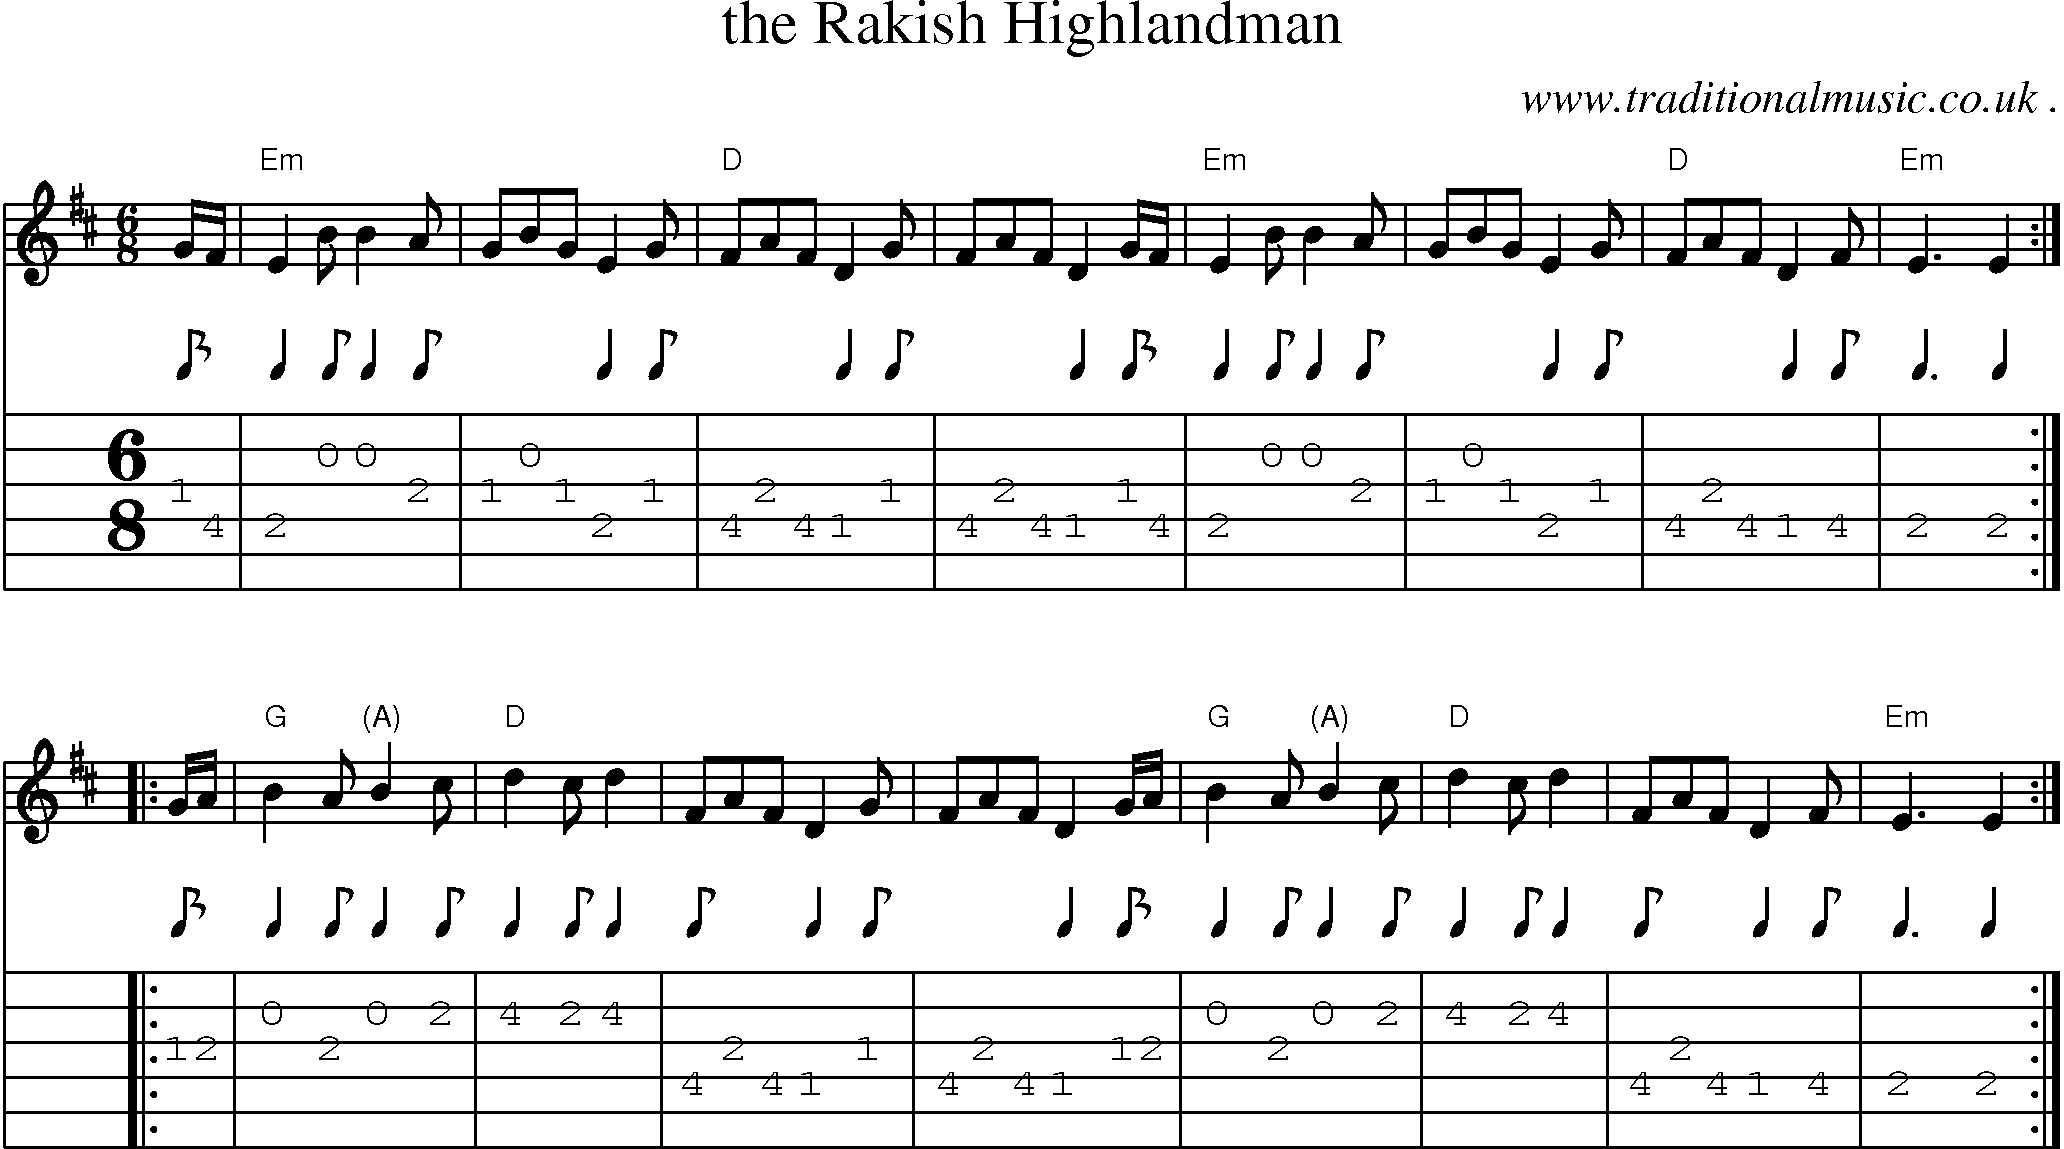 Sheet-music  score, Chords and Guitar Tabs for The Rakish Highlandman